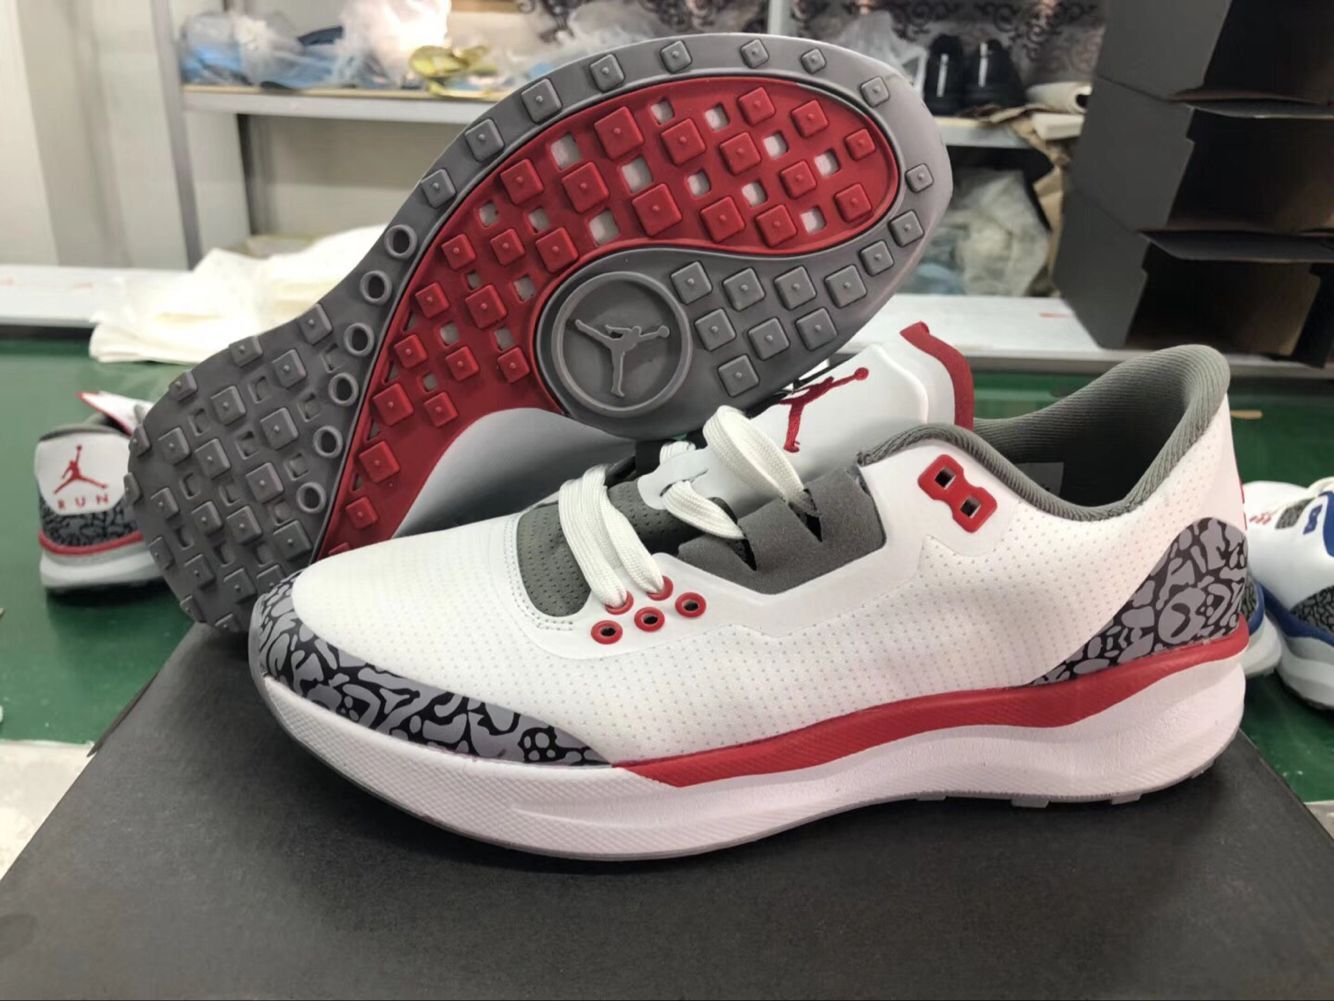 New Jordan 3 Retro Running Shoes White Cement Grey Red